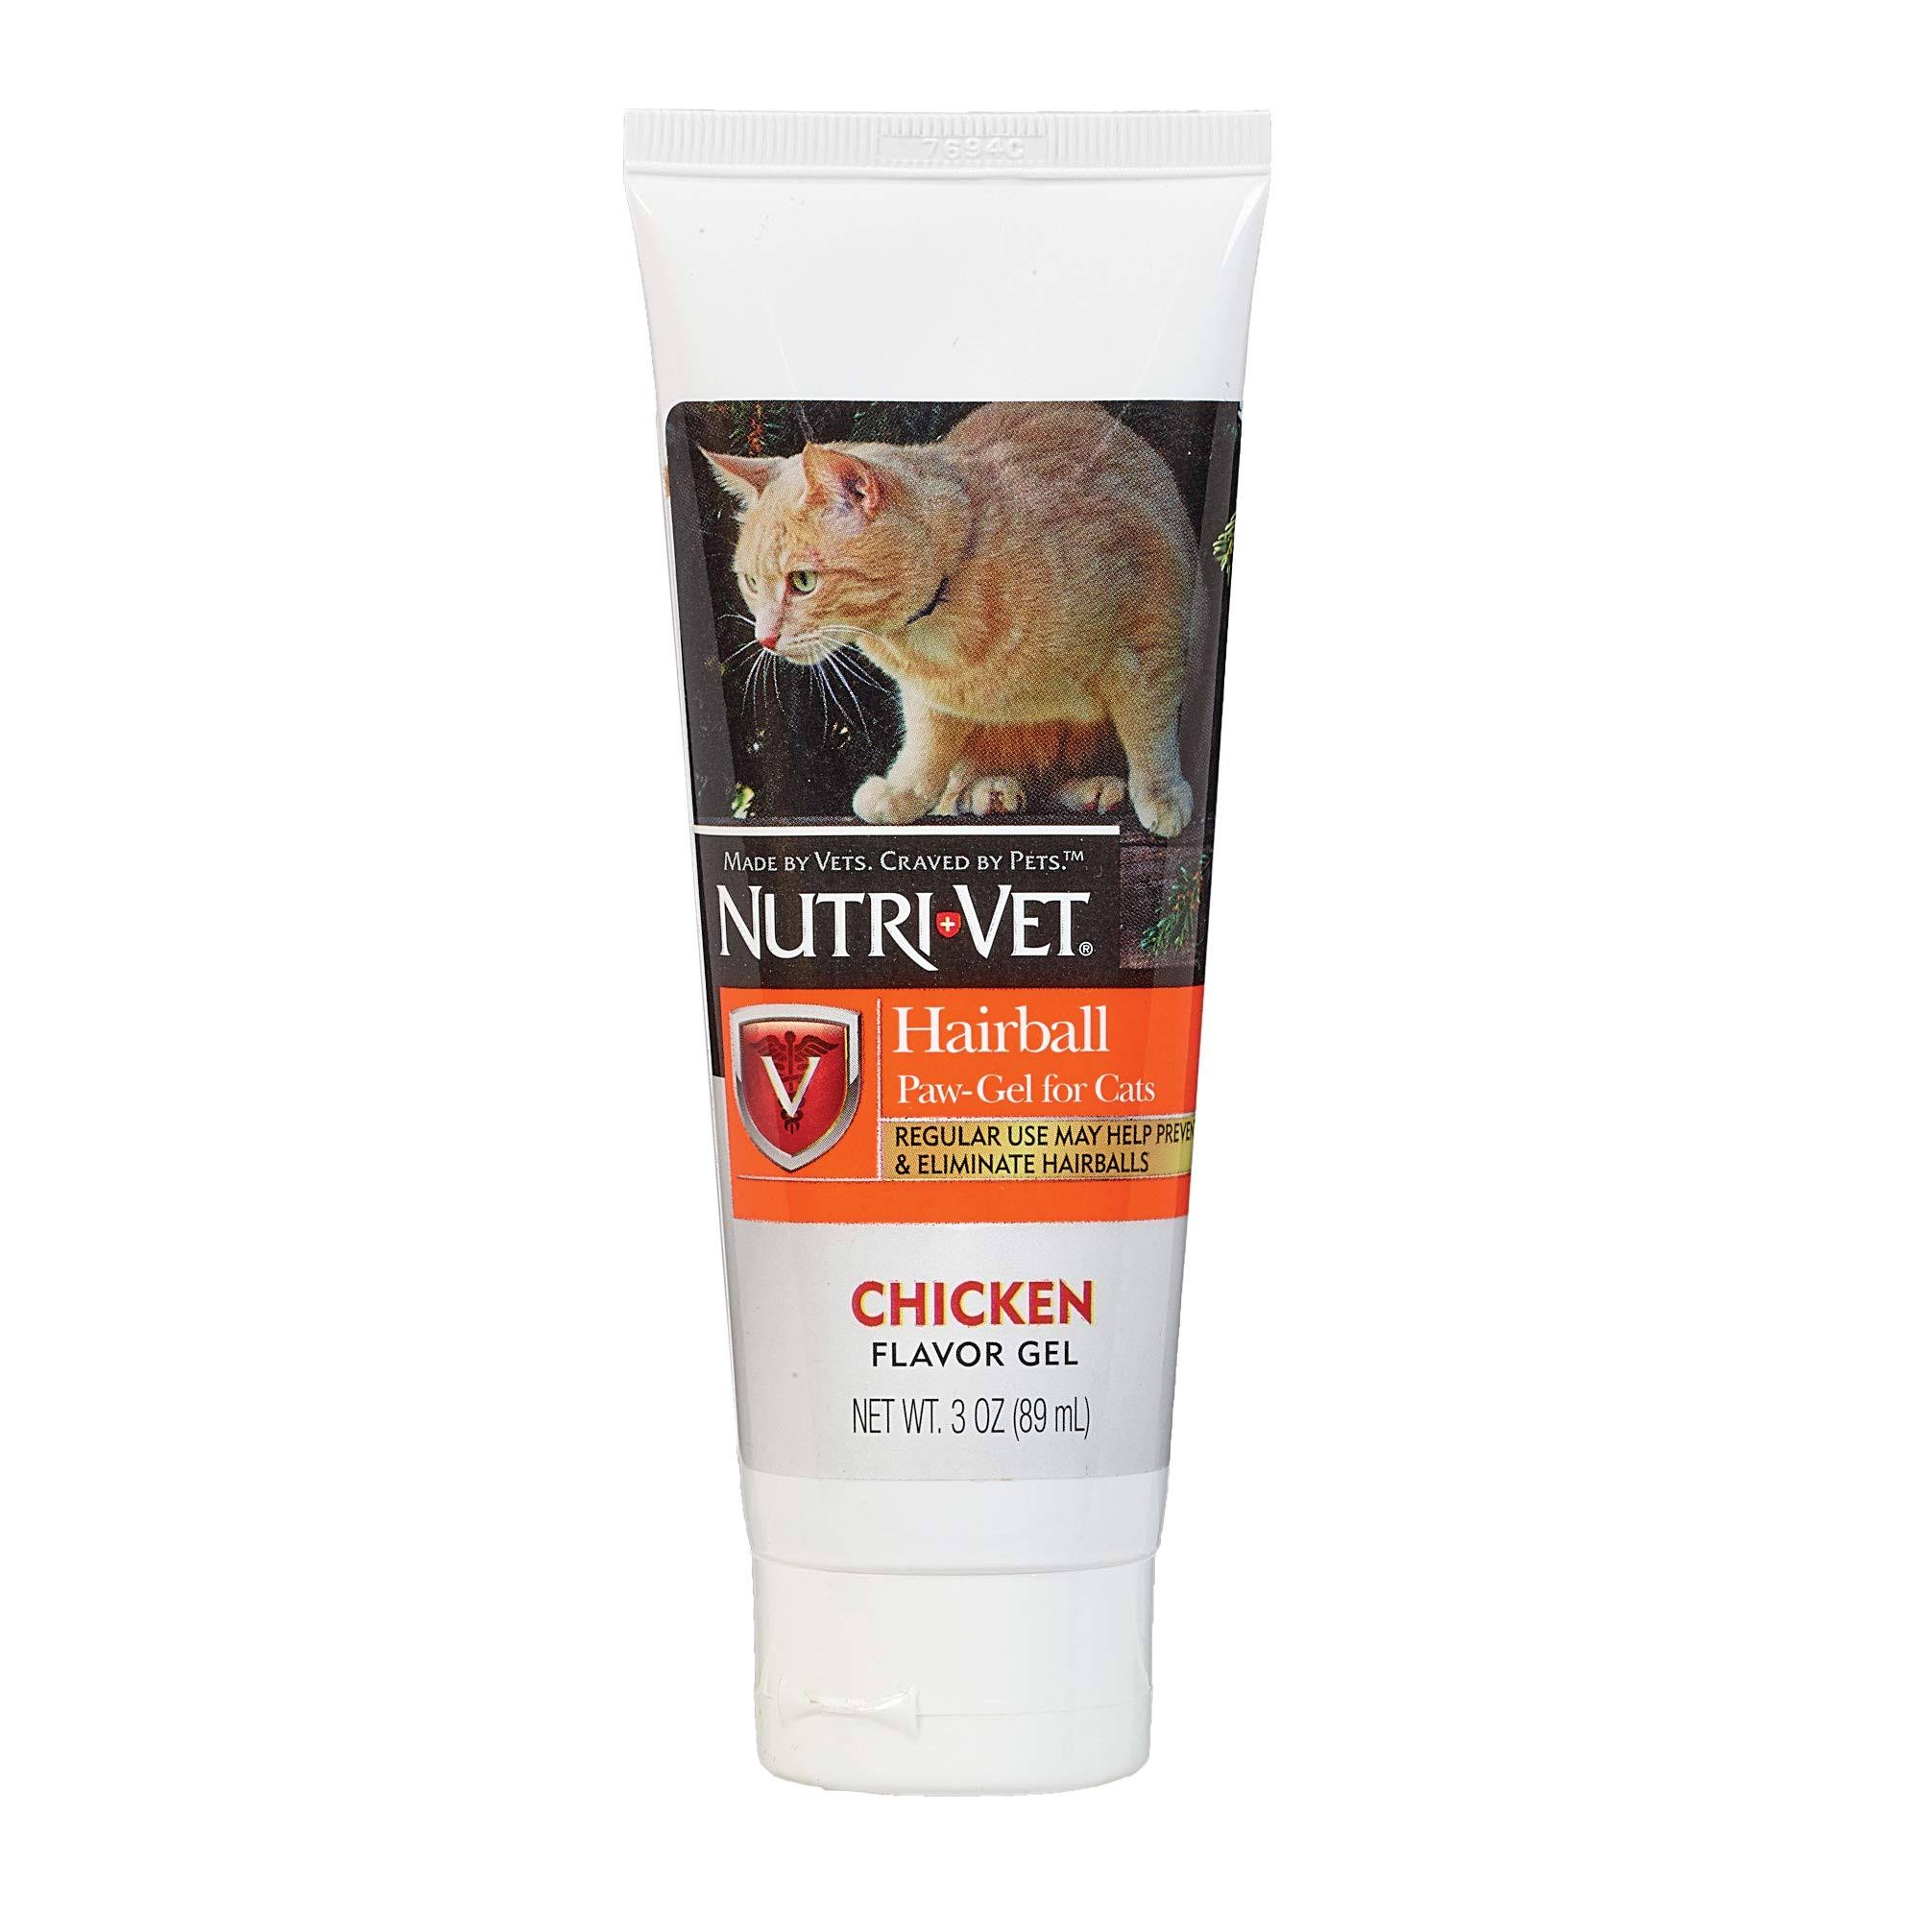 Nutri-Vet Hairball Paw-Gel for Cats - Chicken Flavor, 3oz